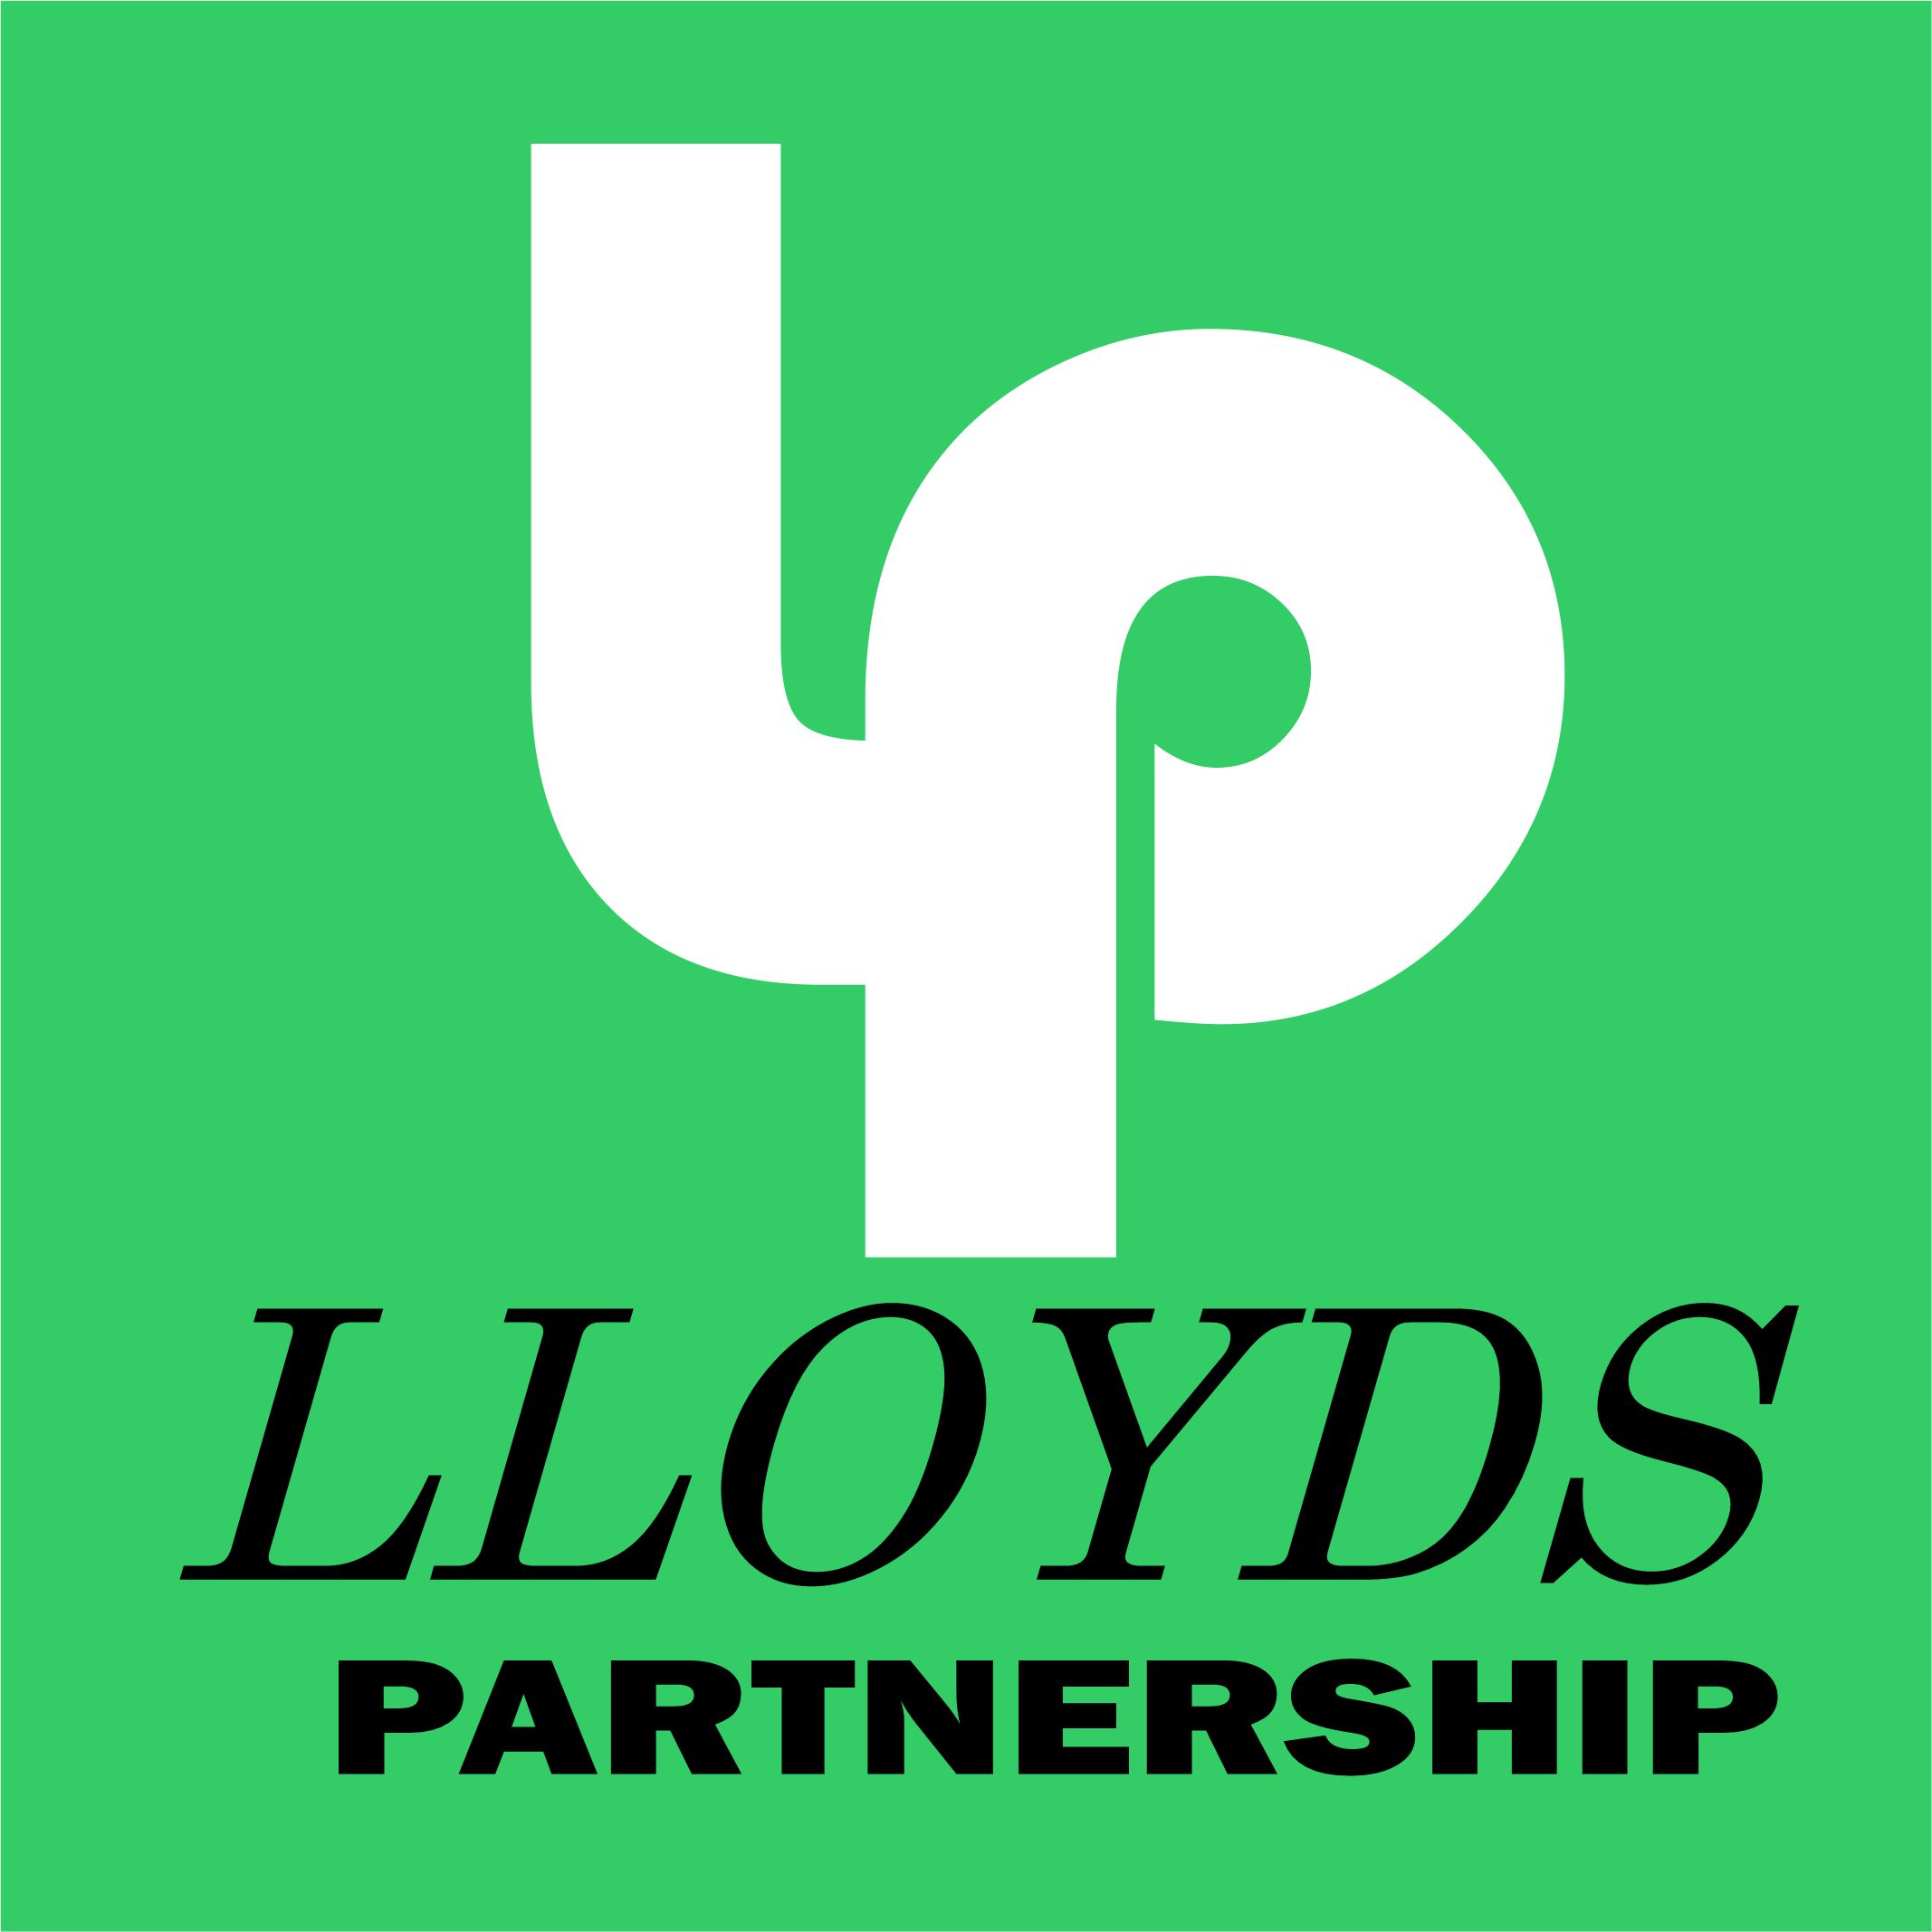 Lloyds Partnership